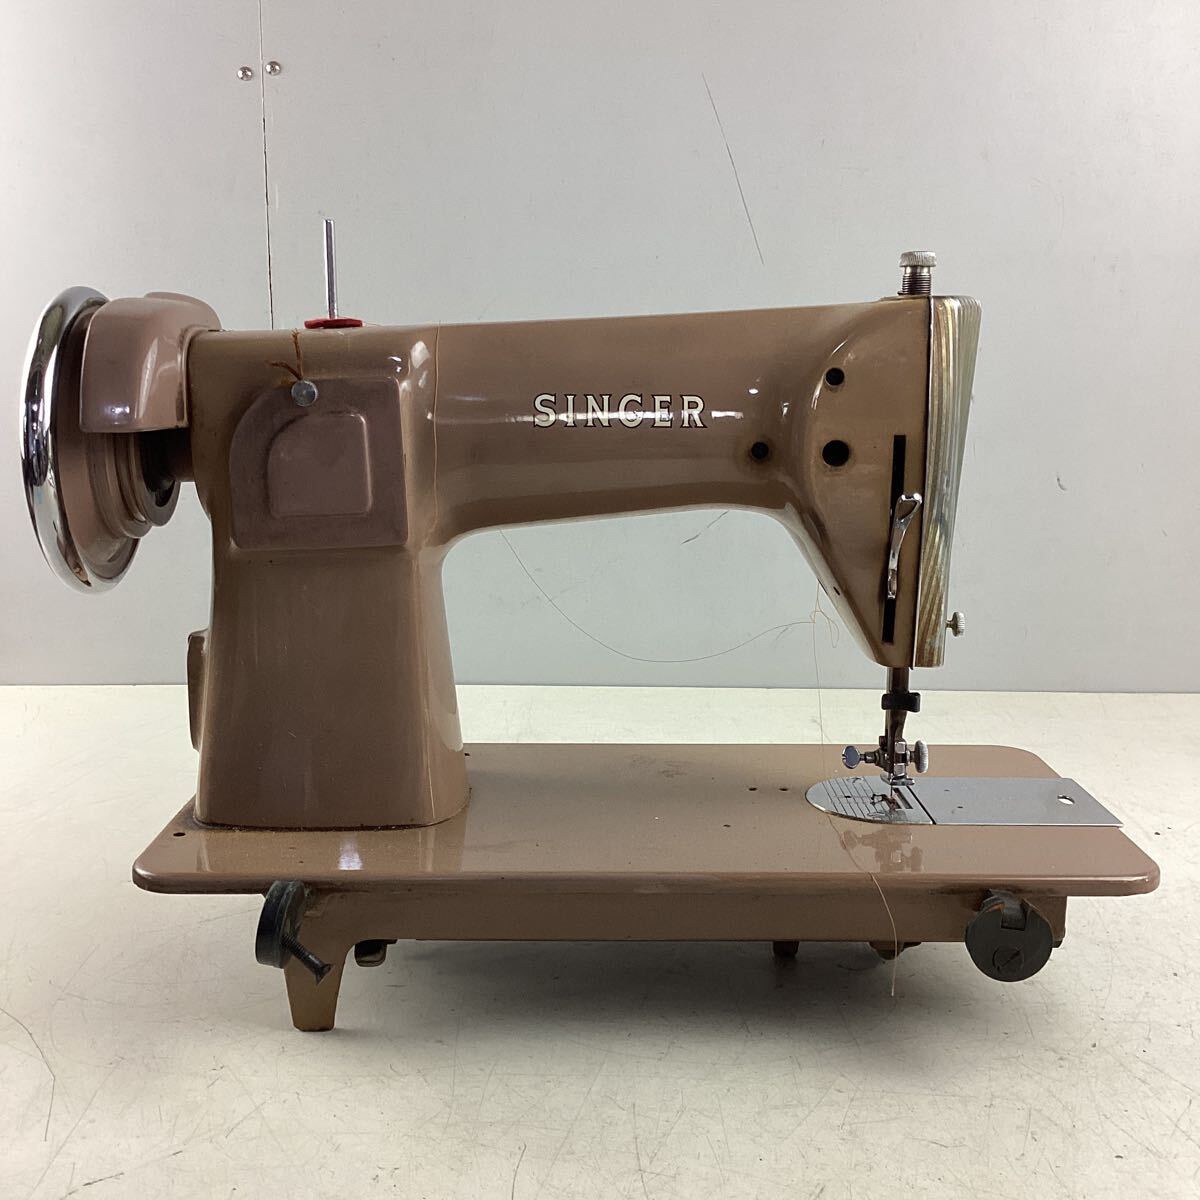 d5325 SINGER sewing machine 191U handicrafts sewing handcraft handicraft antique retro Junk 